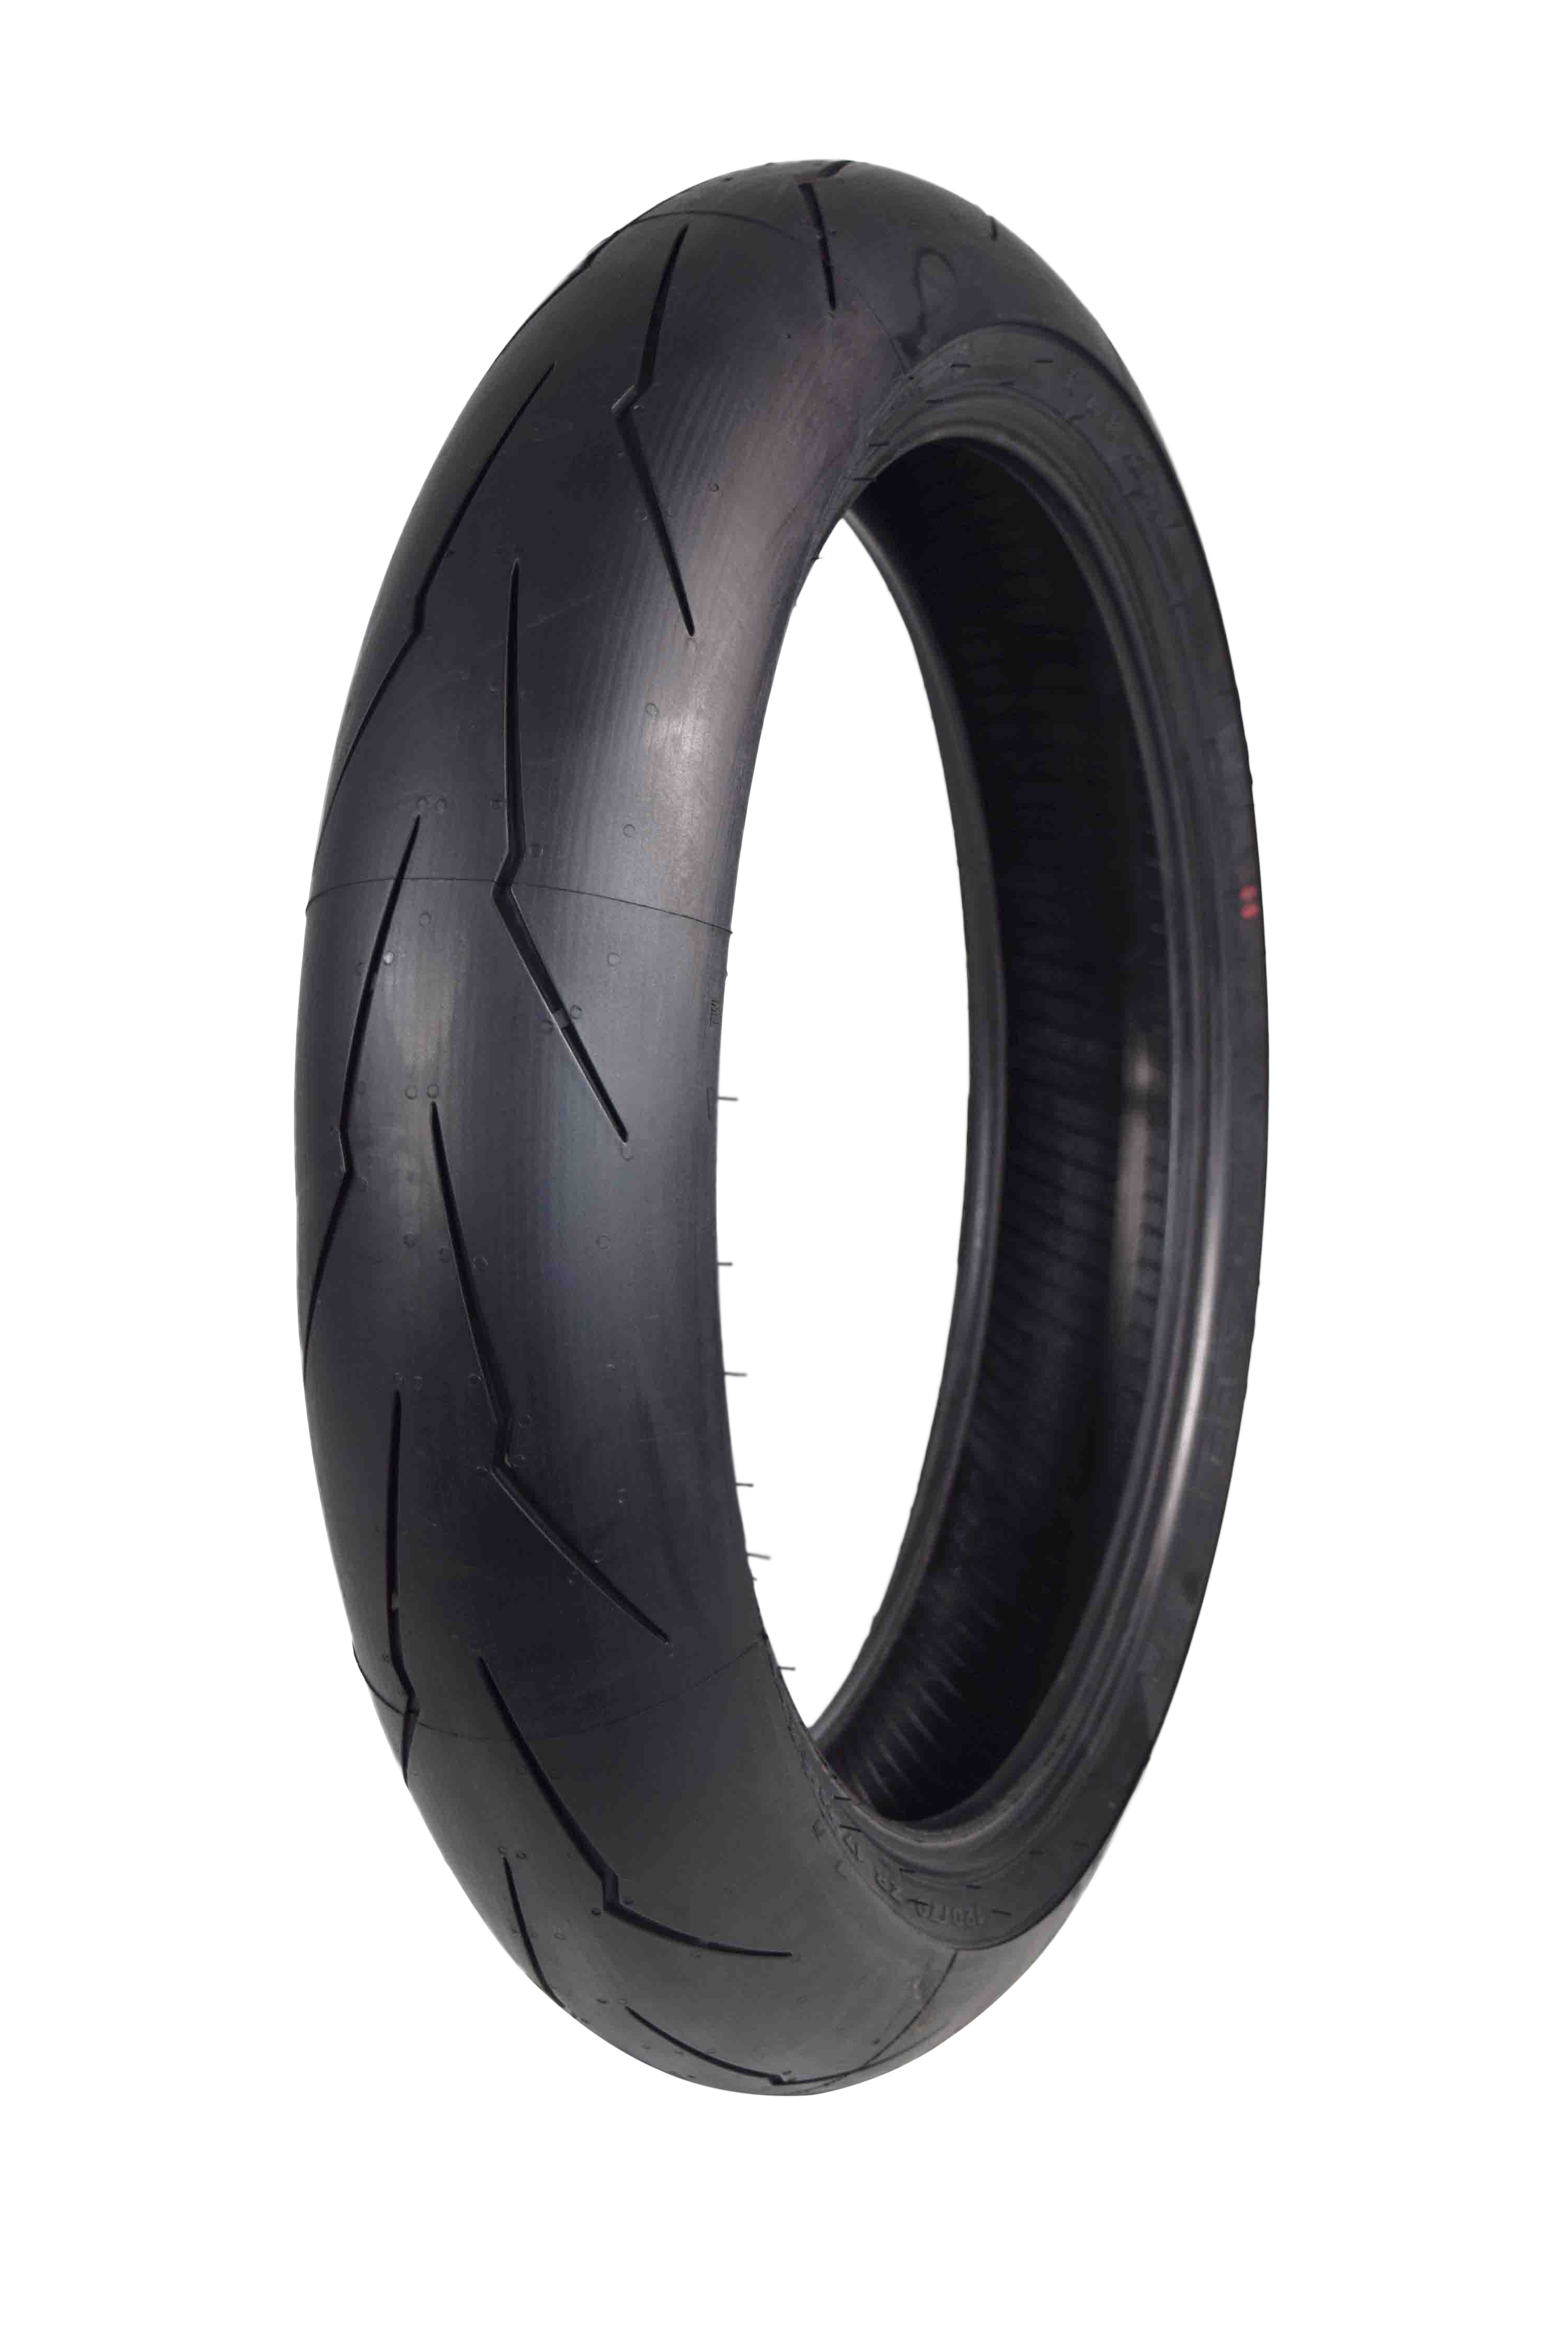 Pirelli-871-1180-Single-SUPER-CORSA-V3-120-70ZR17-Front-Motorcycle-Tire-image-2